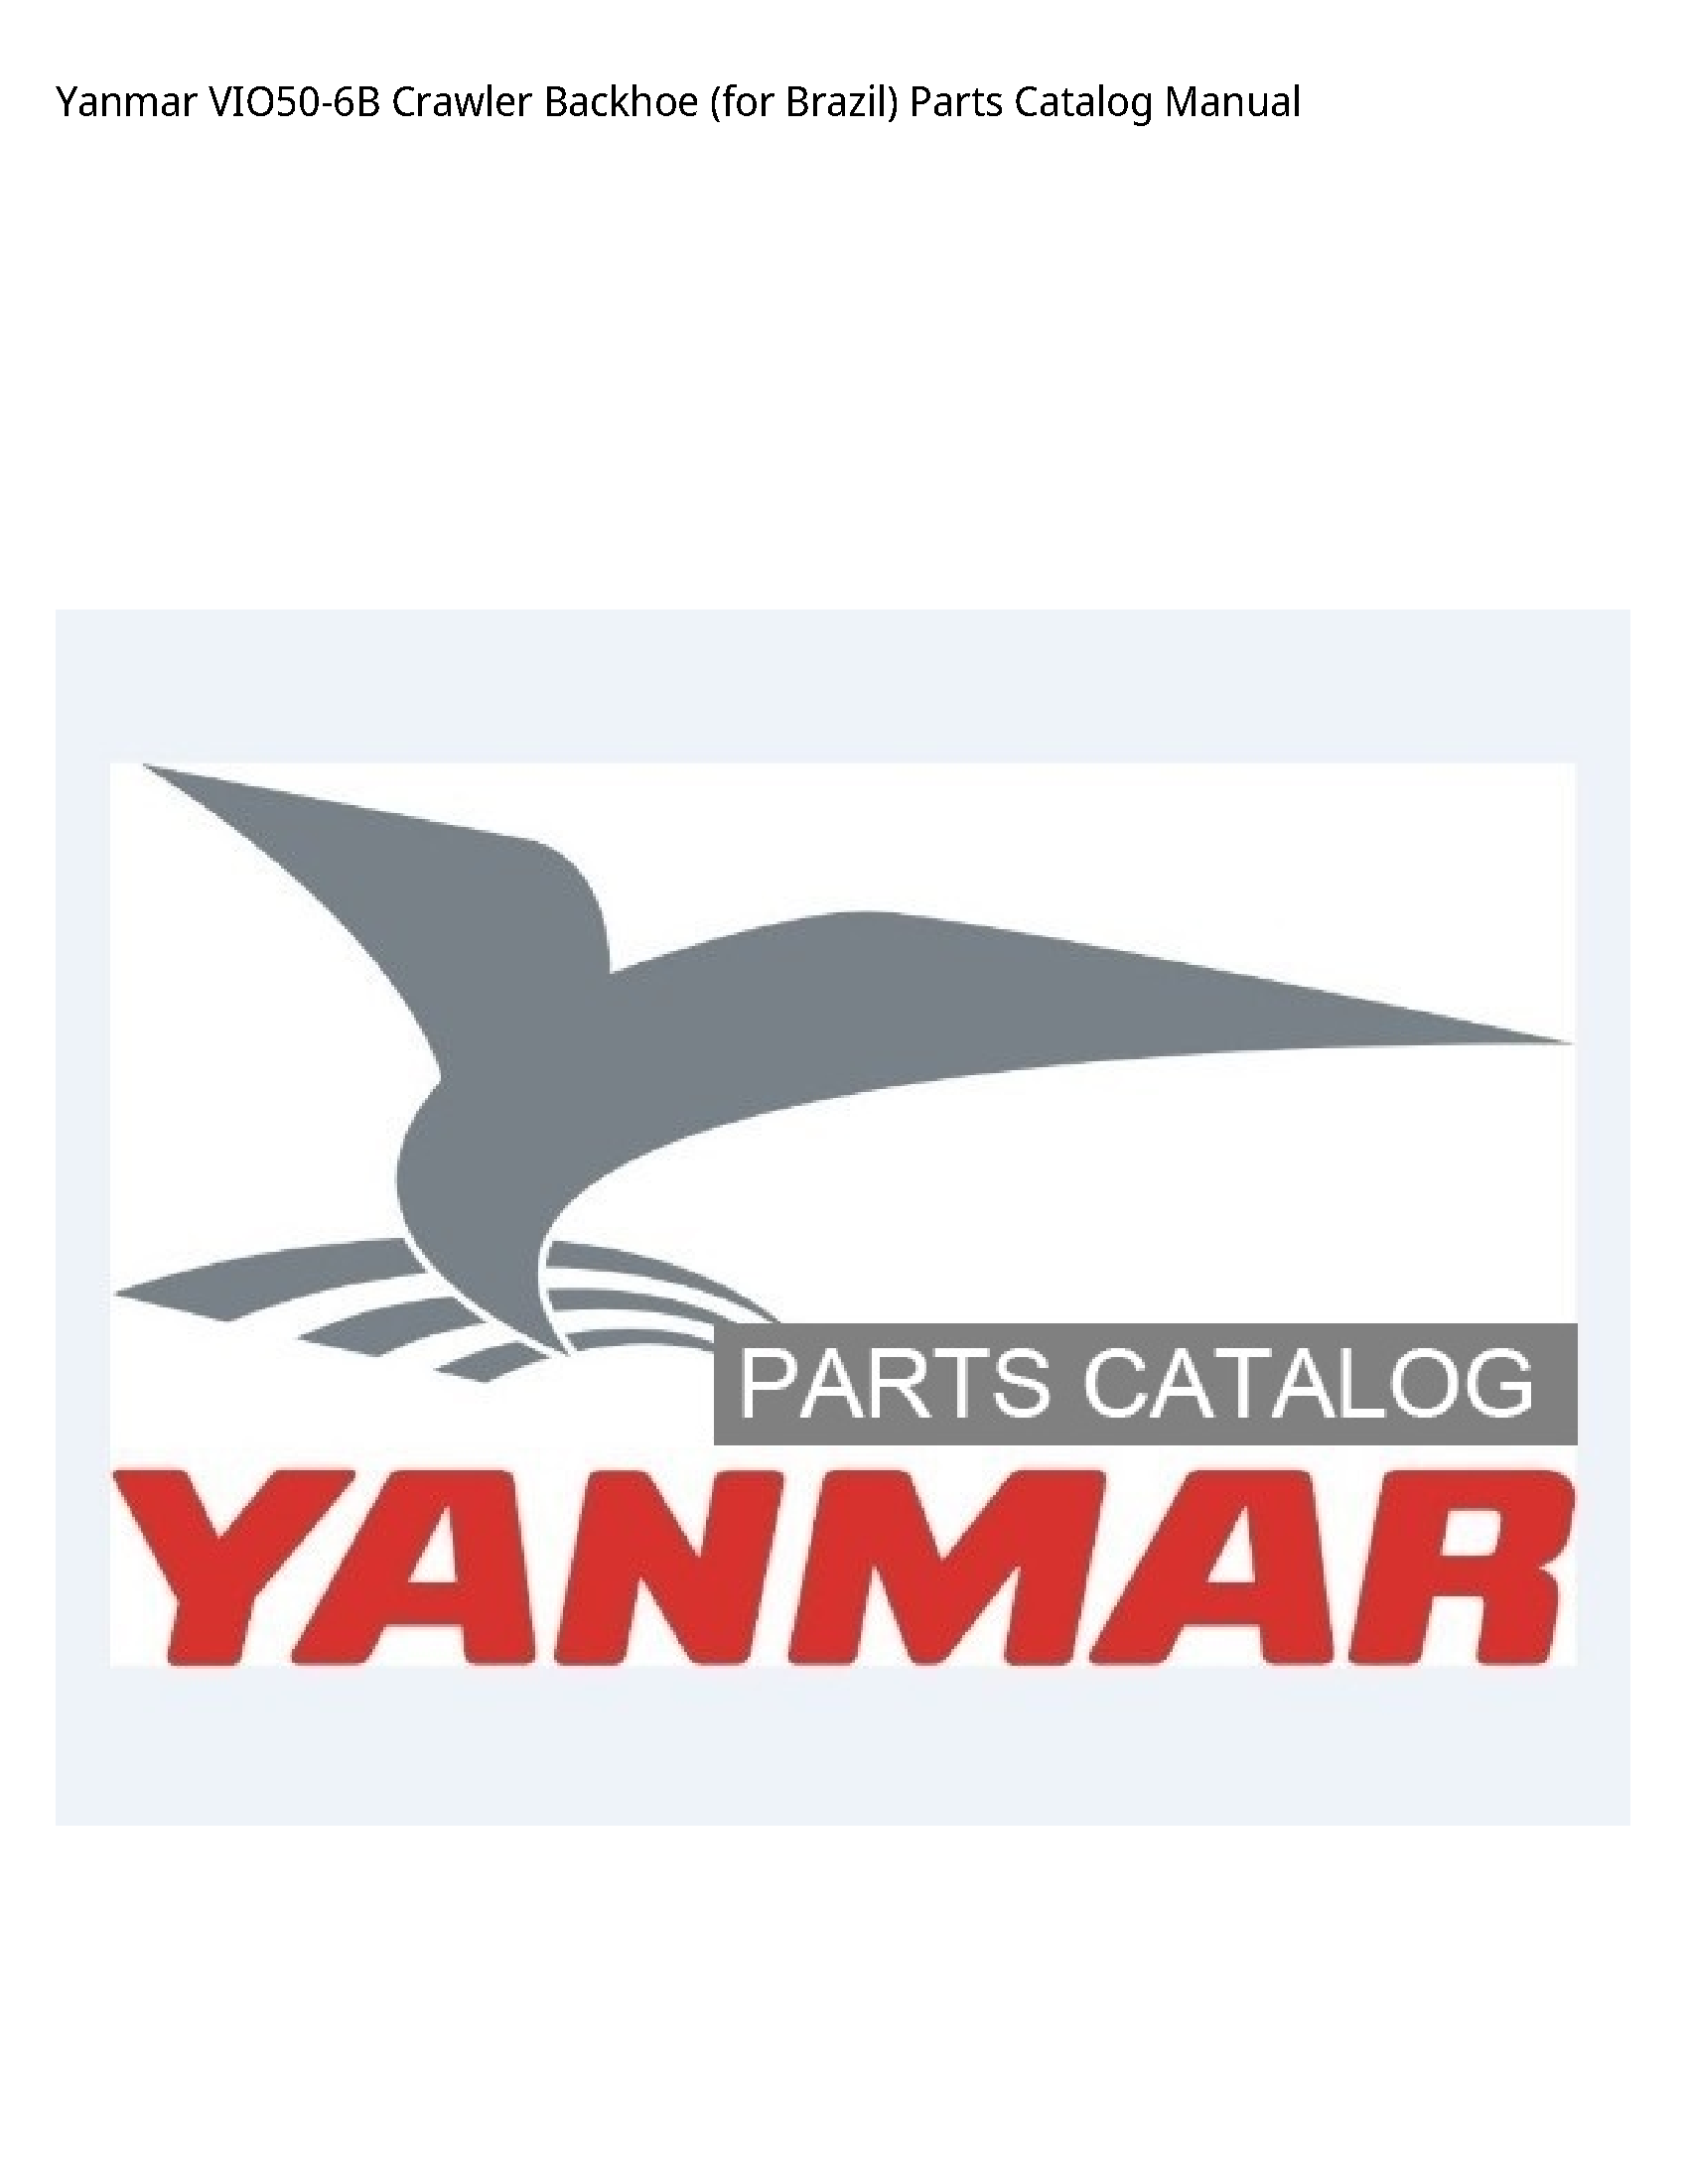 Yanmar VIO50-6B Crawler Backhoe (for Brazil) Parts Catalog manual